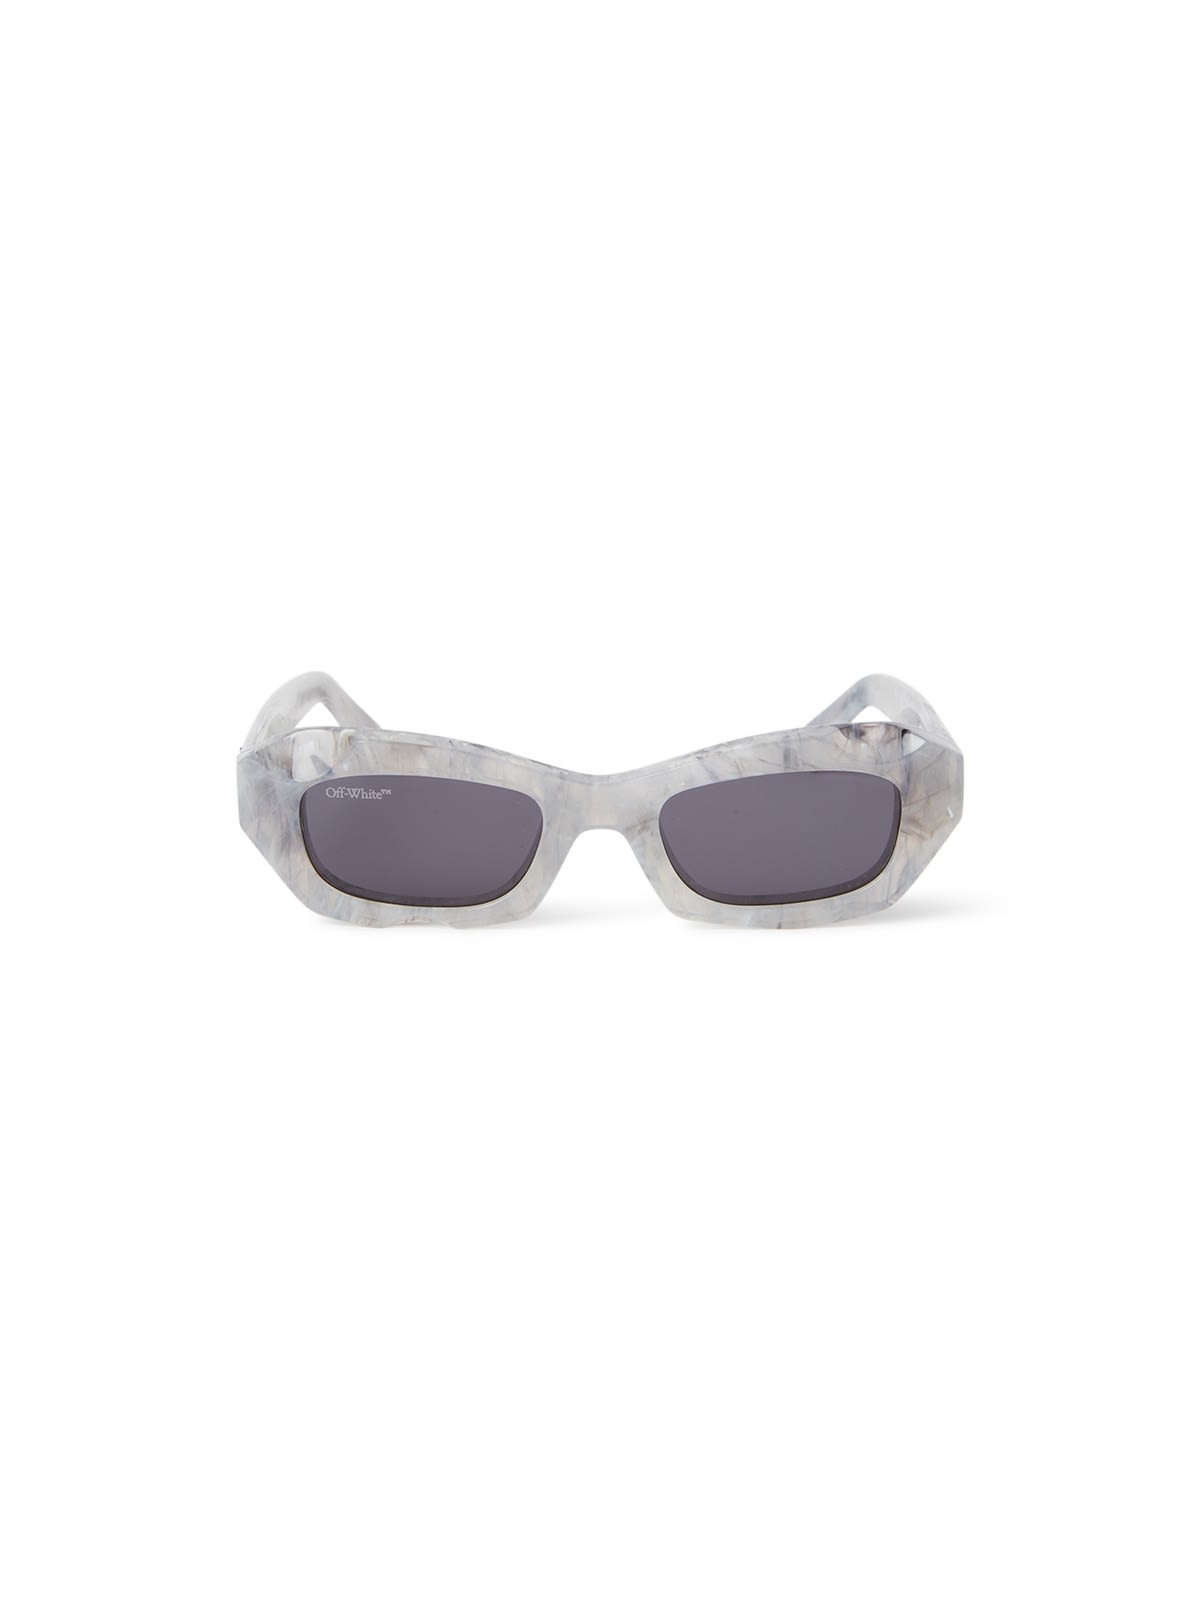 Off-White Virgil OERI008 1007 50 Prescription Sunglasses